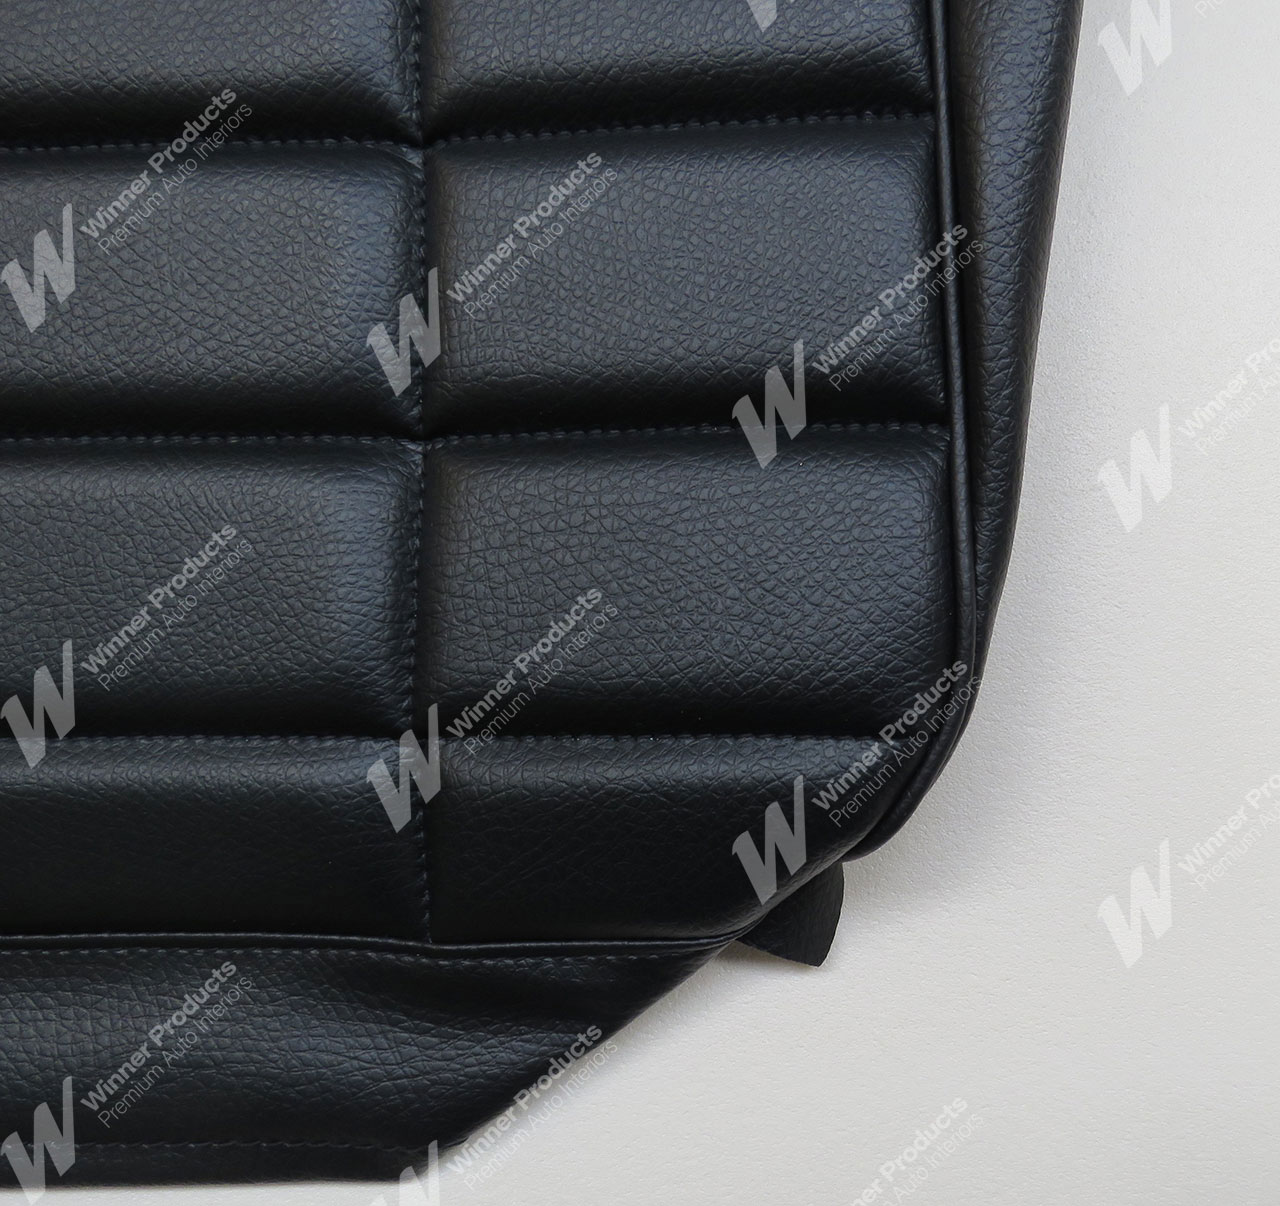 Holden Monaro HG Monaro GTS Coupe 10X Black Seat Covers (Image 6 of 6)